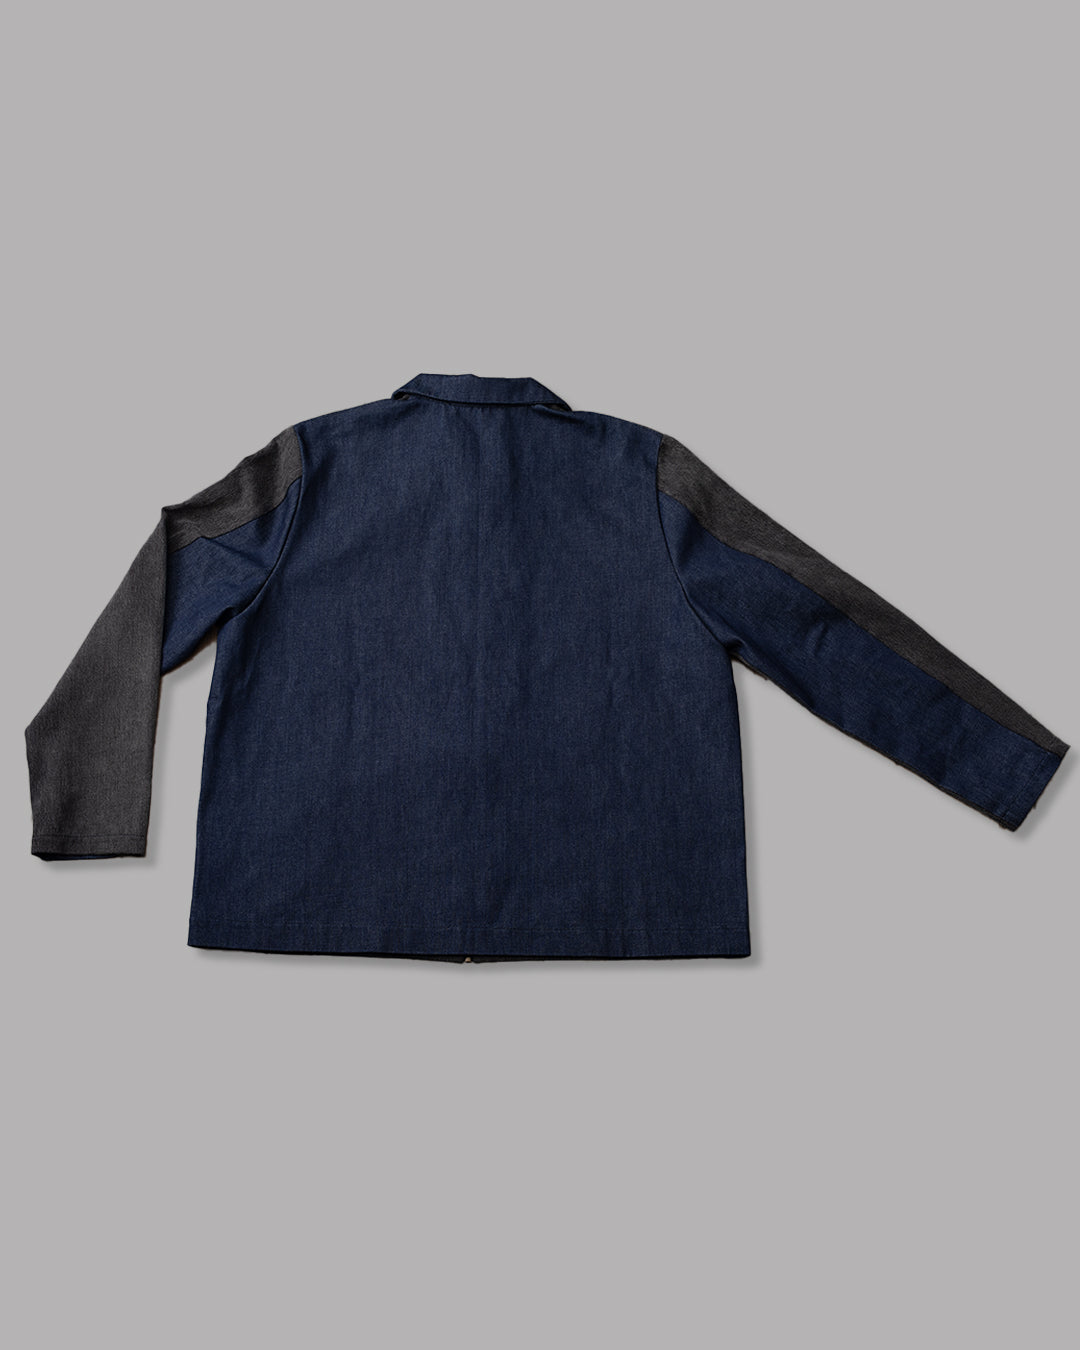 Nocturnal logo denim jacket - upcycled garment